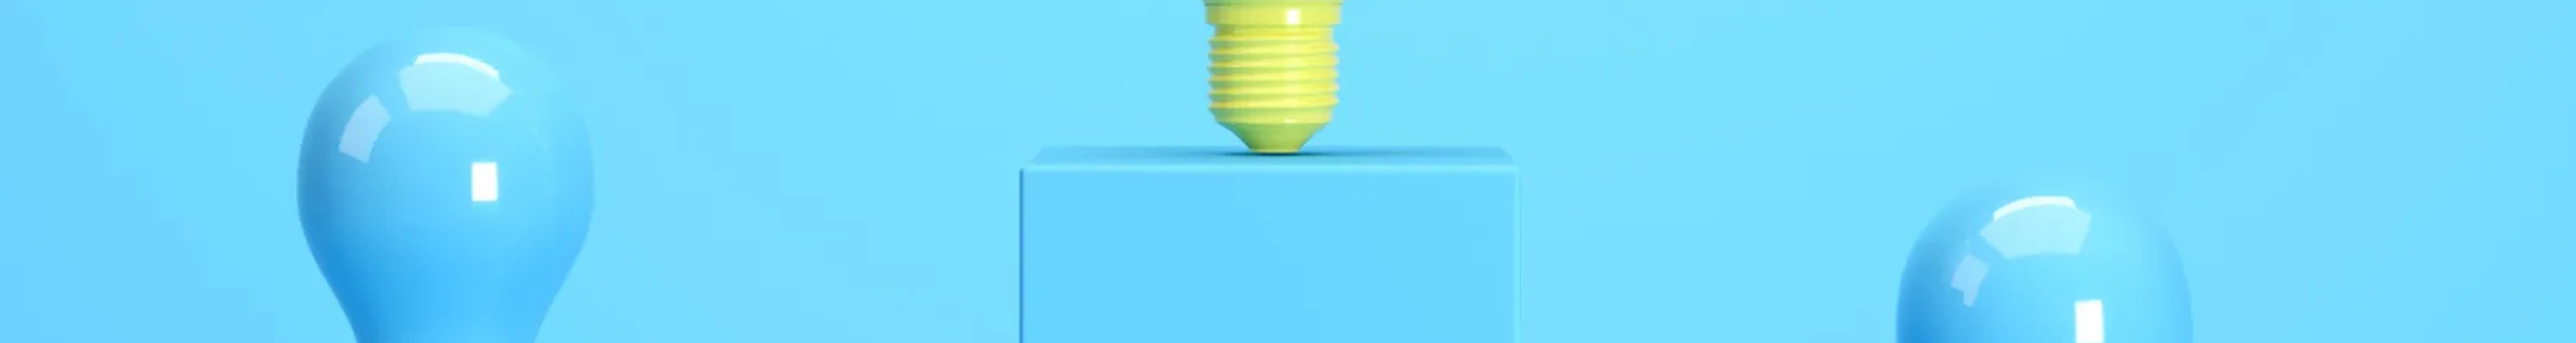 yellow bulbs on a podium blue background resized